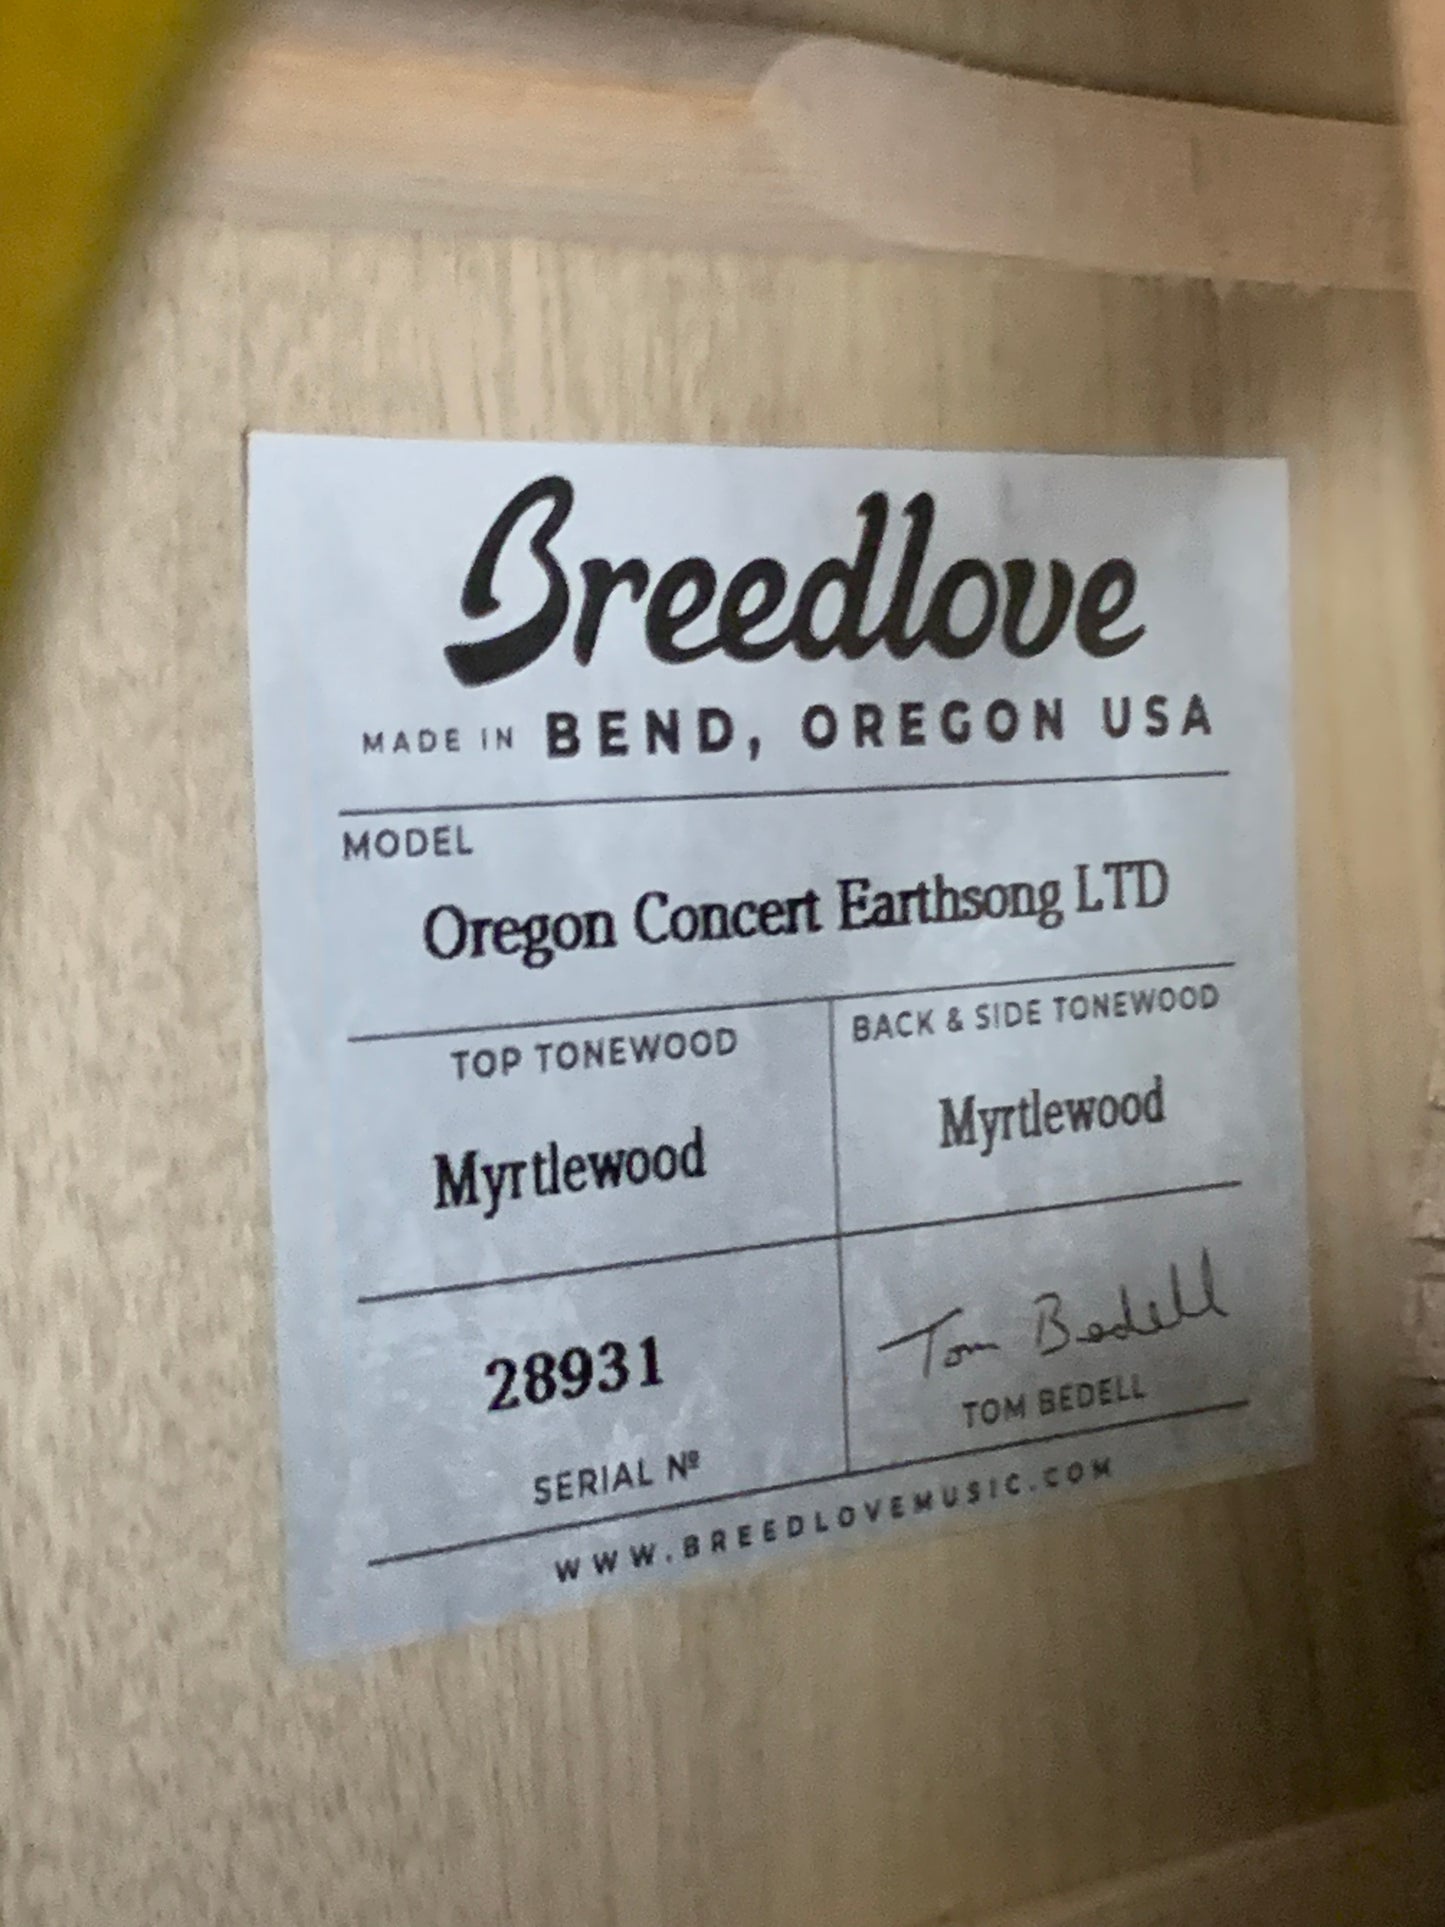 Breedlove Oregon Concert Earthsong LTD #28931